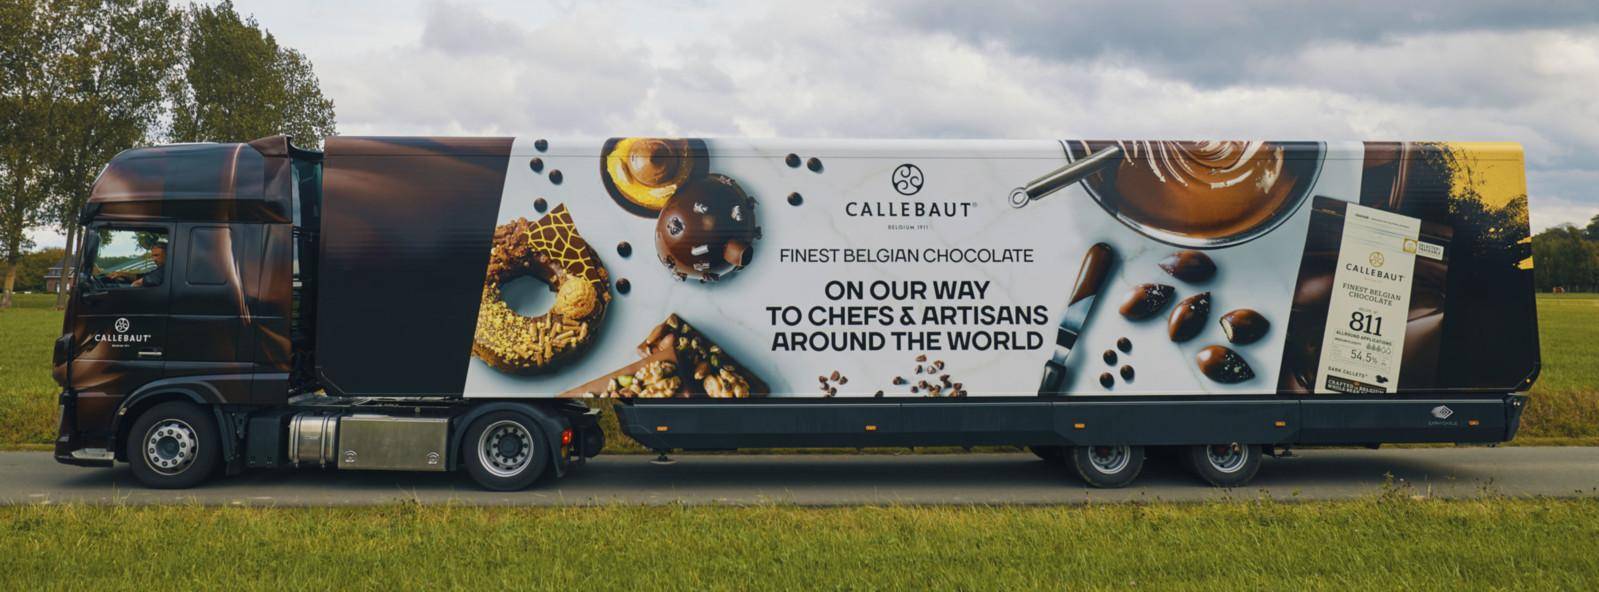 Callebaut Truck Recipes